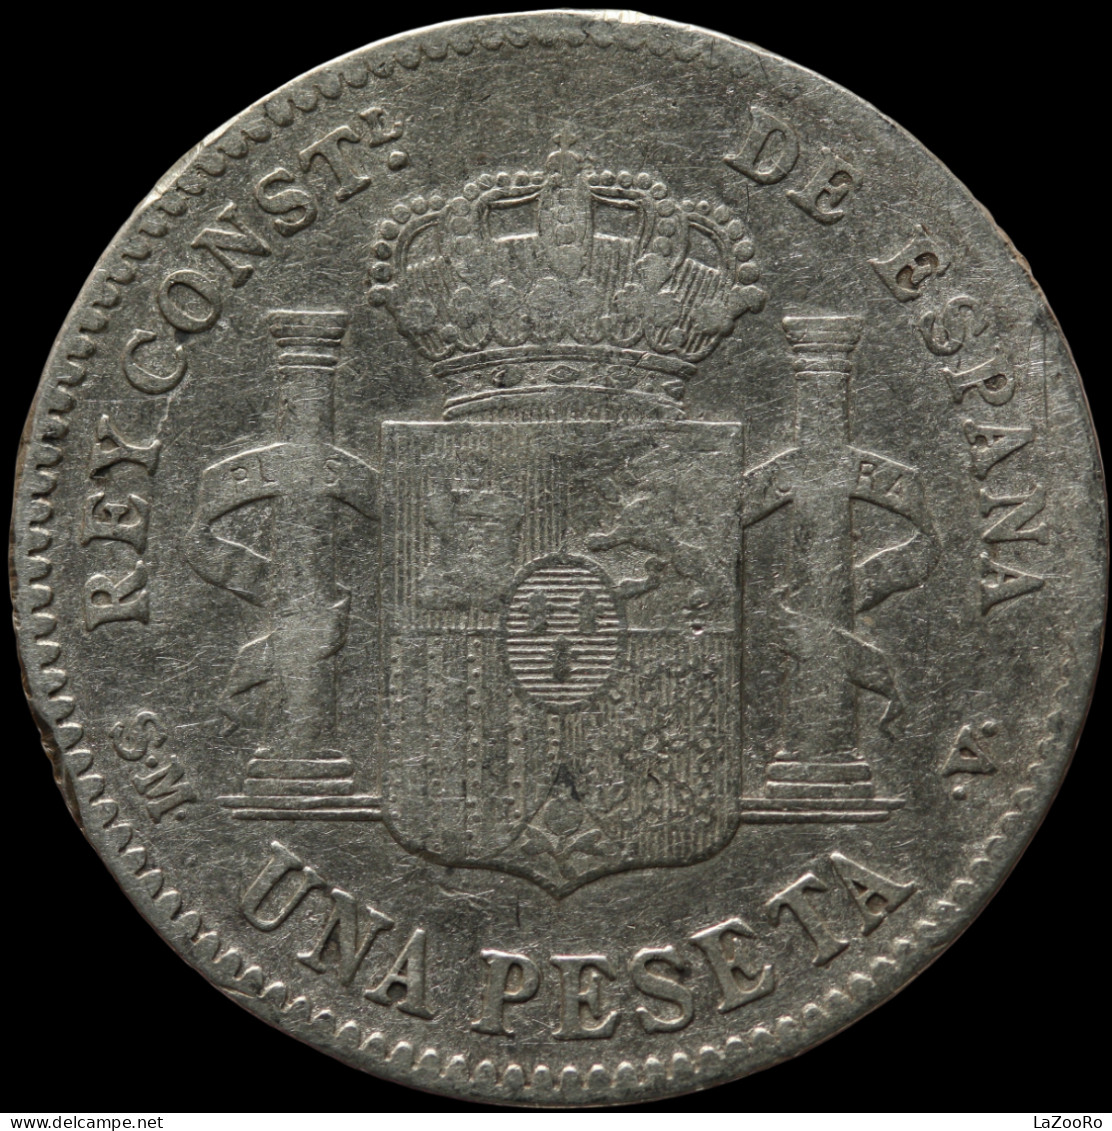 LaZooRo: Spain 1 Peseta 1901 F / VF - Silver - First Minting